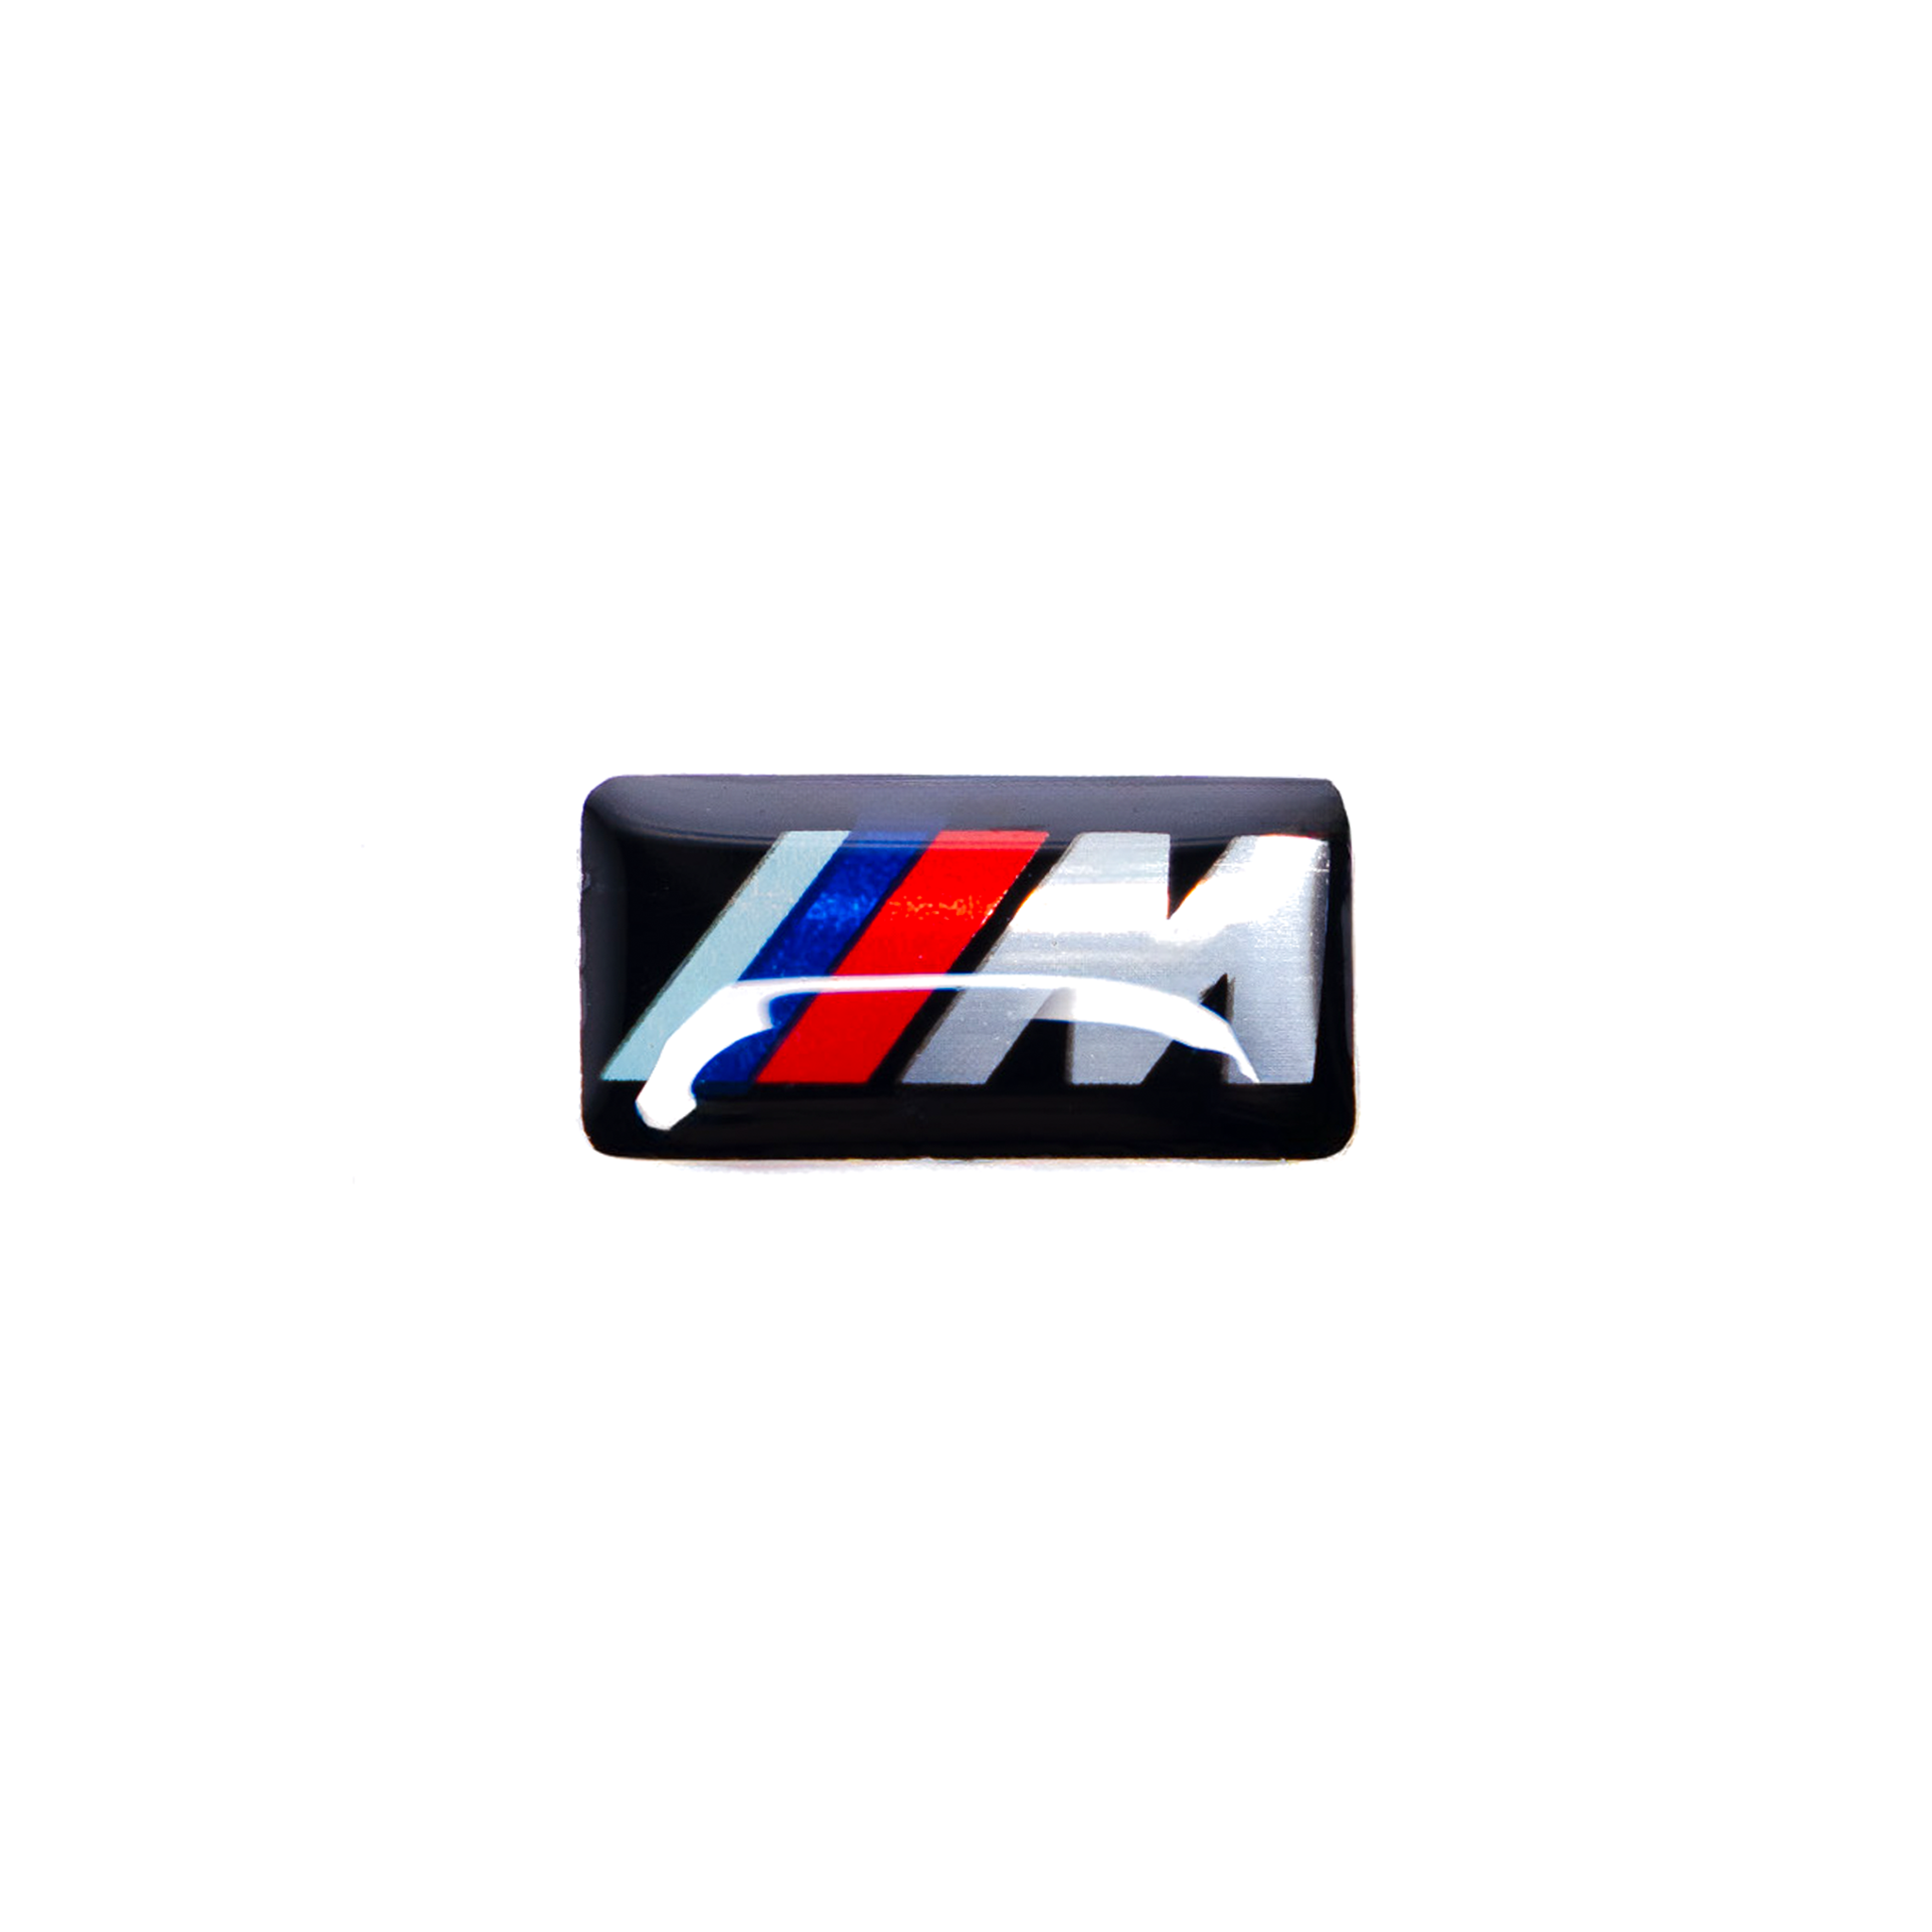 Emblema de la insignia del volante Exon M para BMW 1 2 3 4 5 6 7 8-Series 1M M2 M3 M4 M5 M6 M8